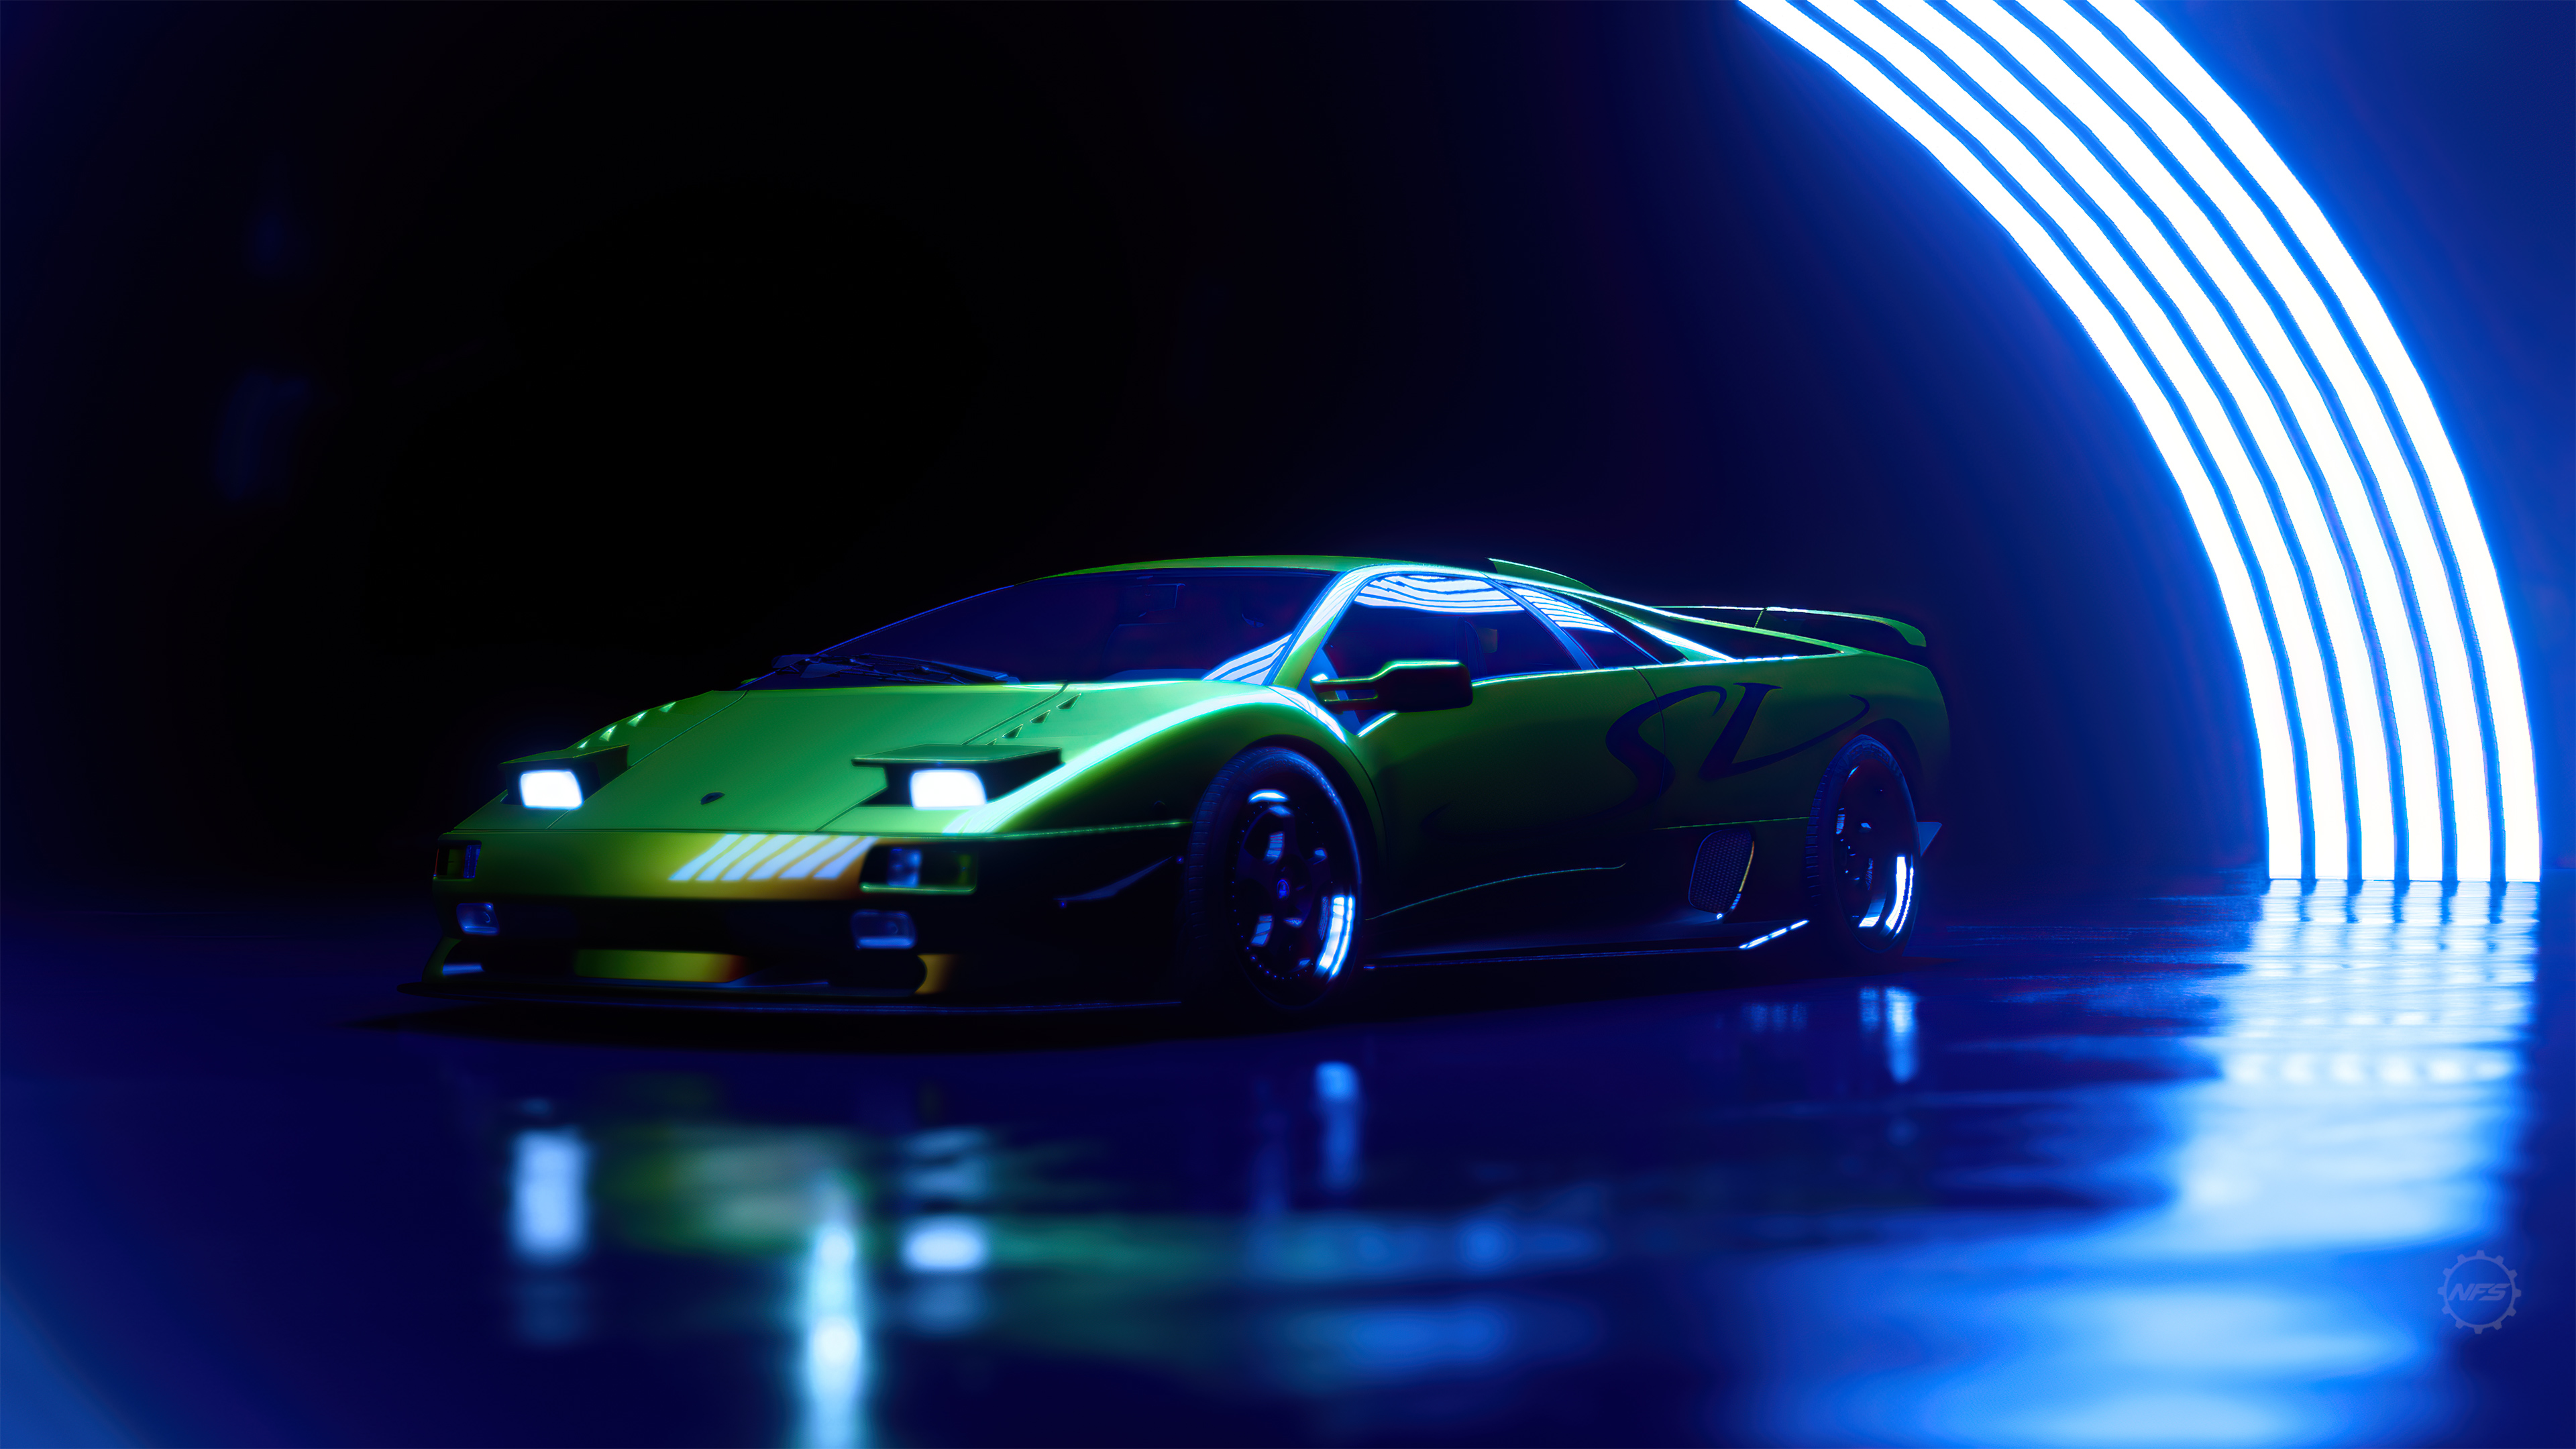 Lamborghini Diablo SC Need for Speed Wallpaper 4k Ultra HD ID:10007